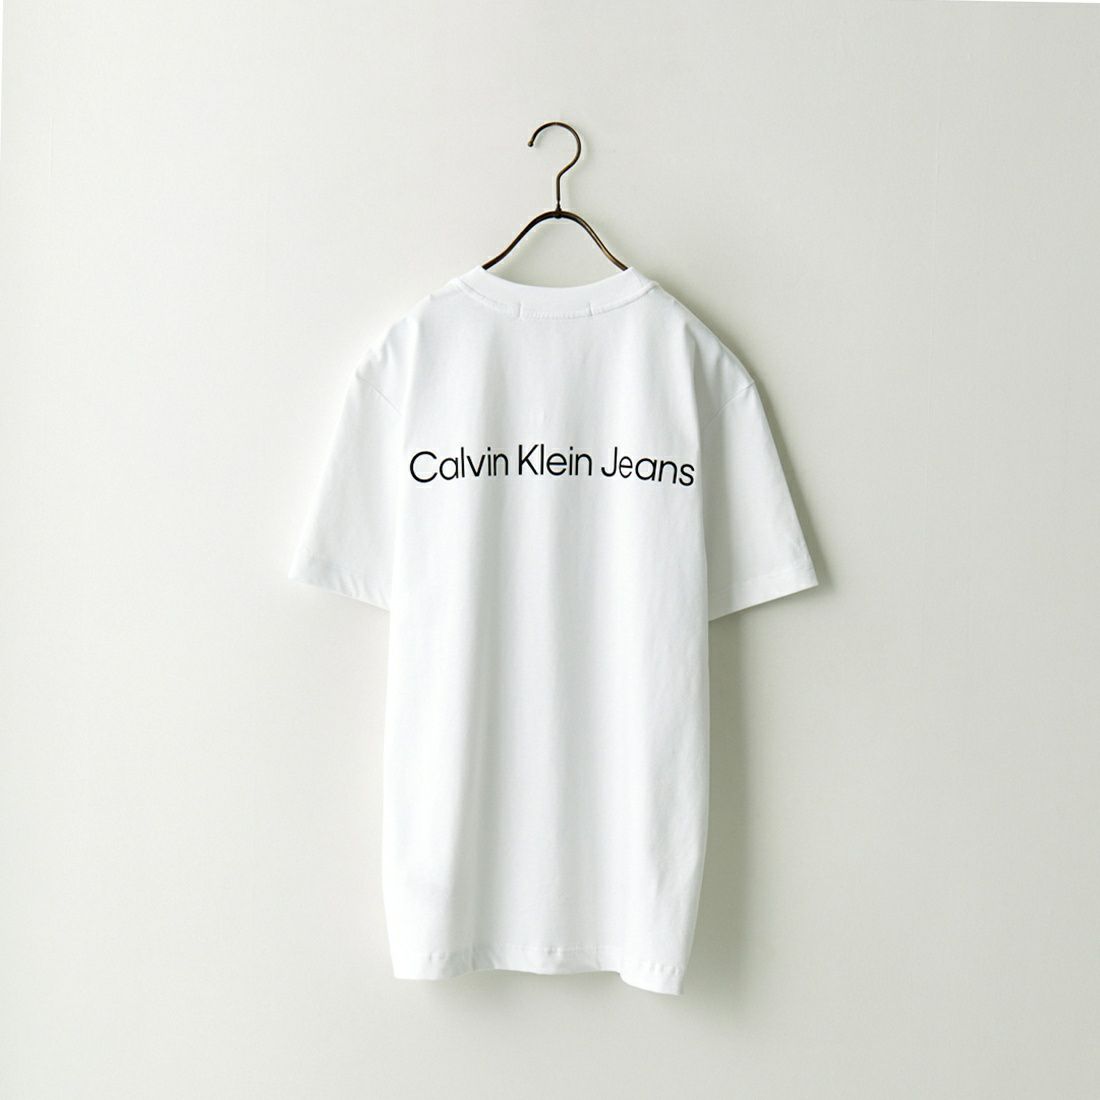 Calvin Klein Jeans [カルバンクライン ジーンズ] ロゴプリントTシャツ